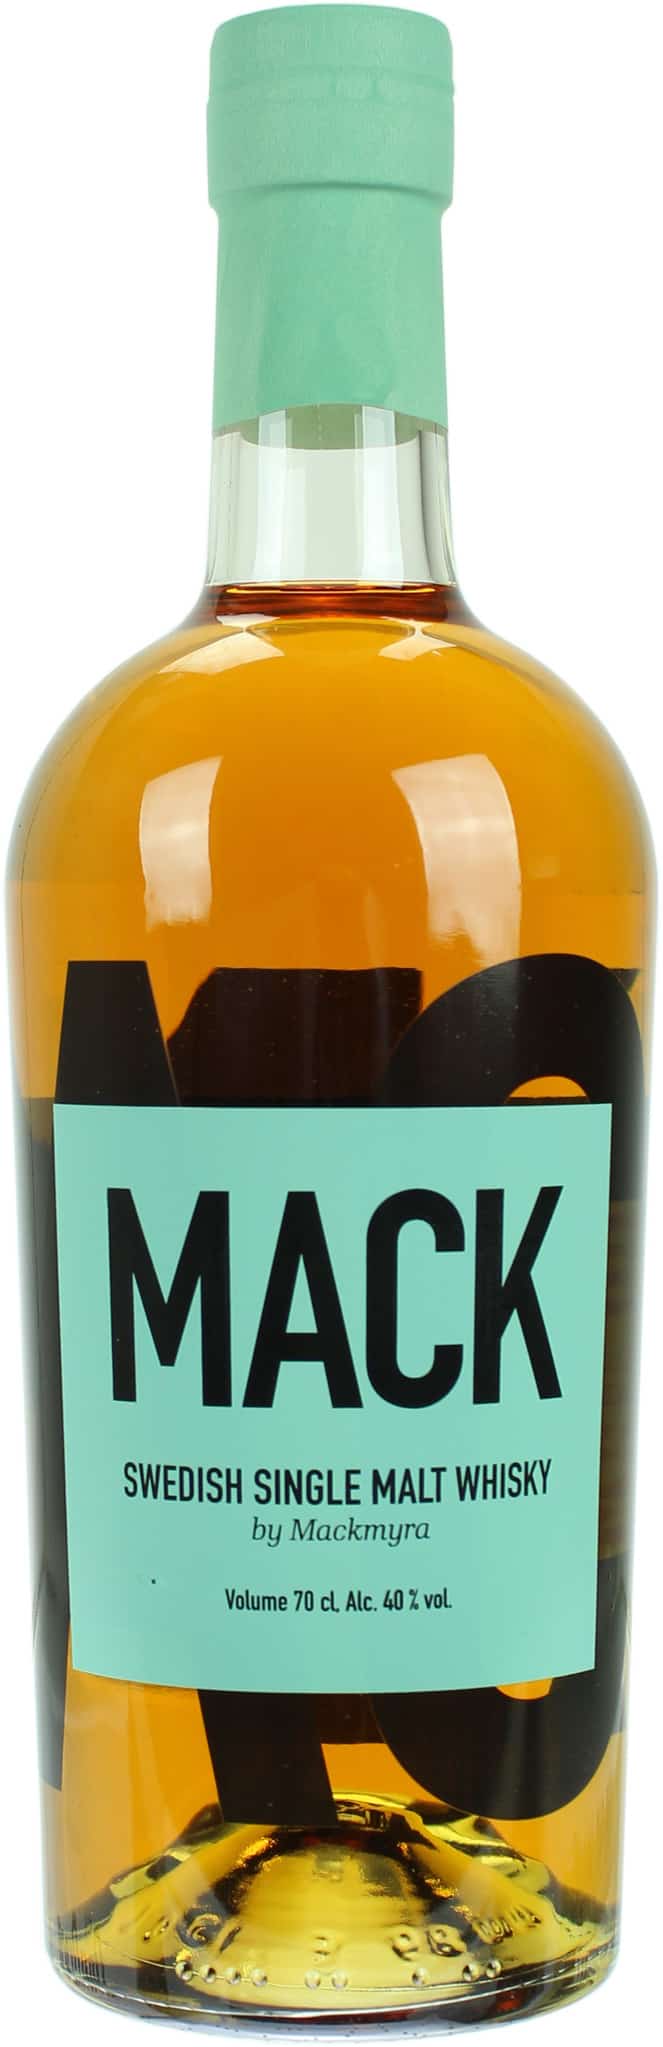 Mackmyra Swedish Single Malt Whisky